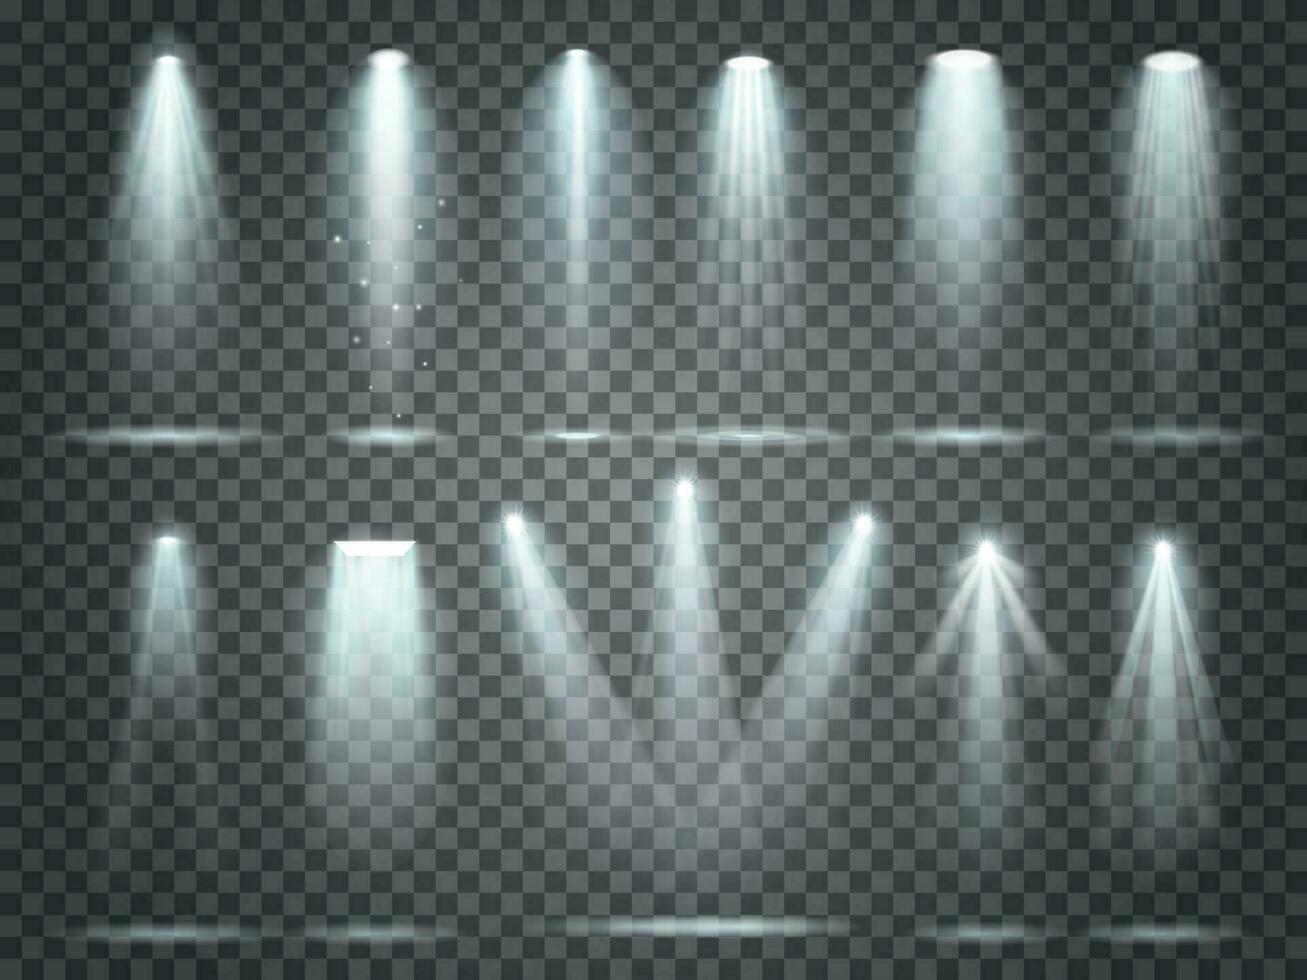 Beam of floodlight, illuminators lights, stage illumination spotlight. Night club party floodlights and spotlights lighting vector set